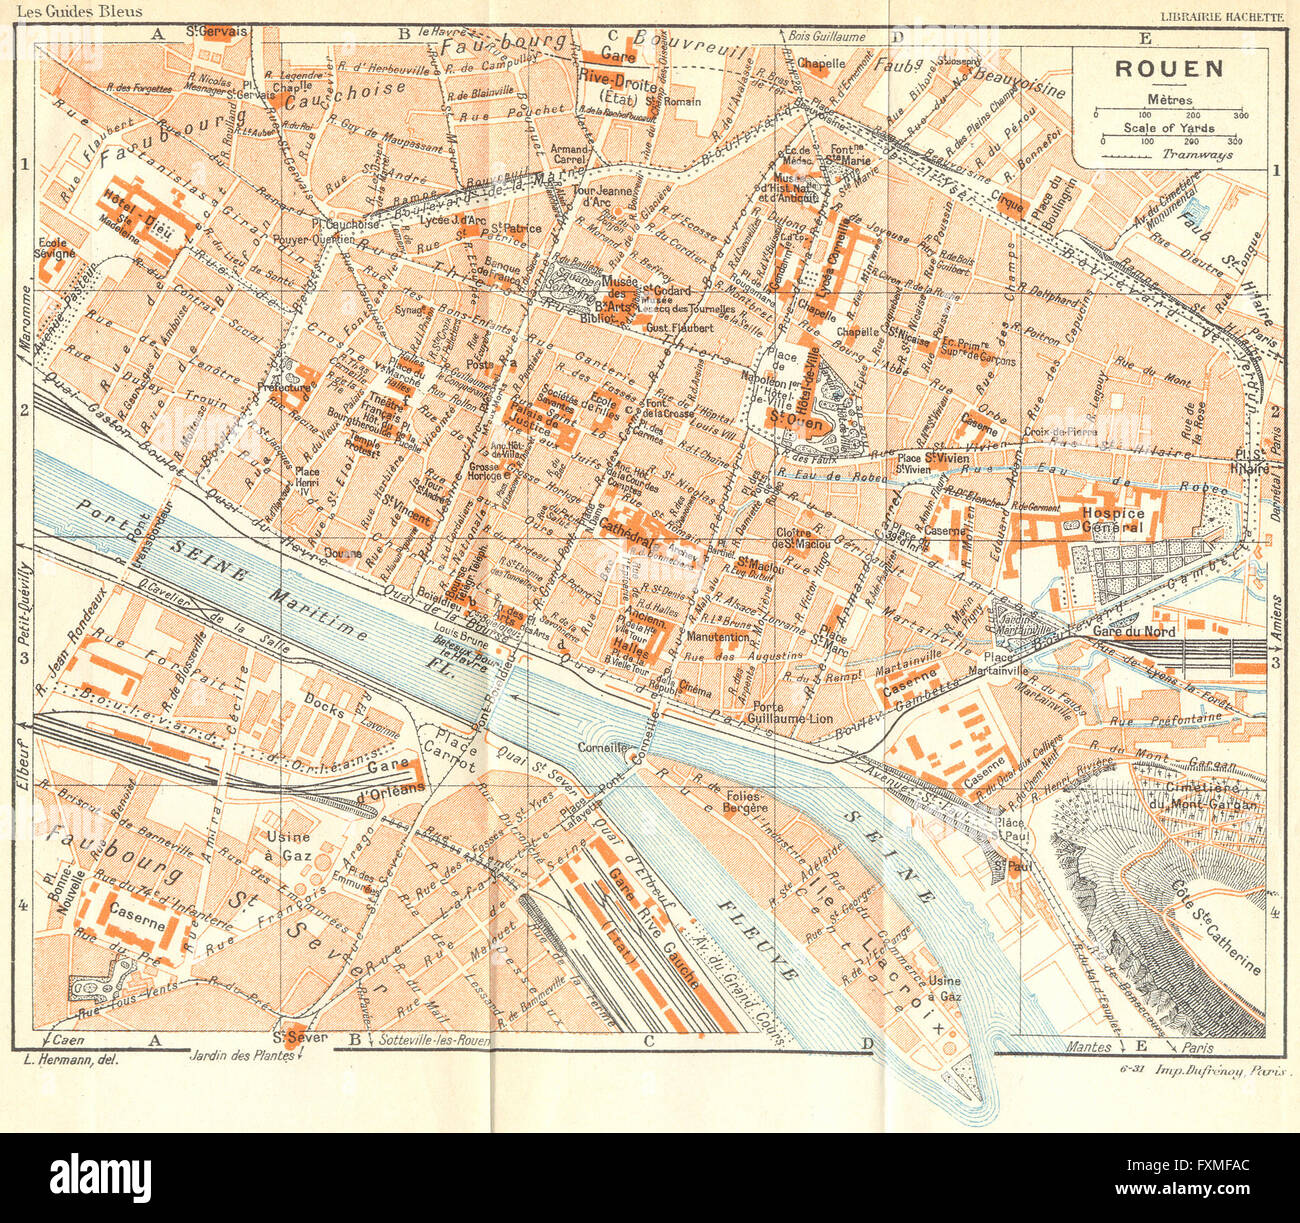 FRANCE: Rouen, 1932 vintage map Stock Photo